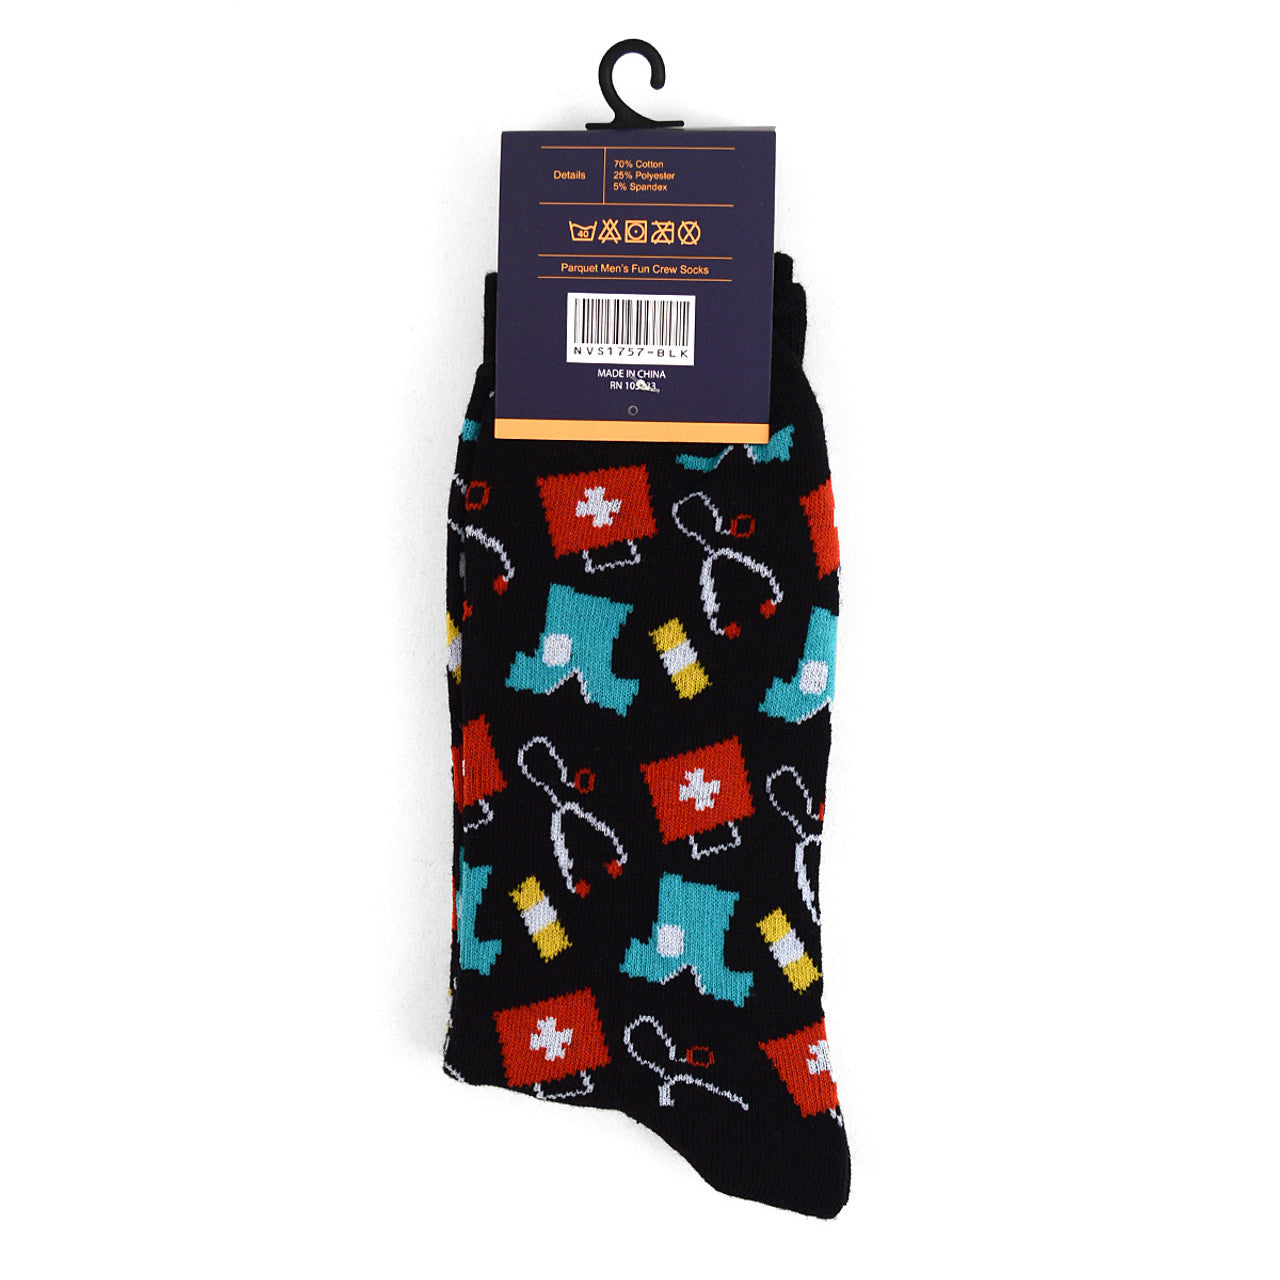 Doctors Nurse Medical Team Socks Men Novelty Socks Personalized Socks Doctor Gifts Cool Socks Gift Cool Nurse Gift